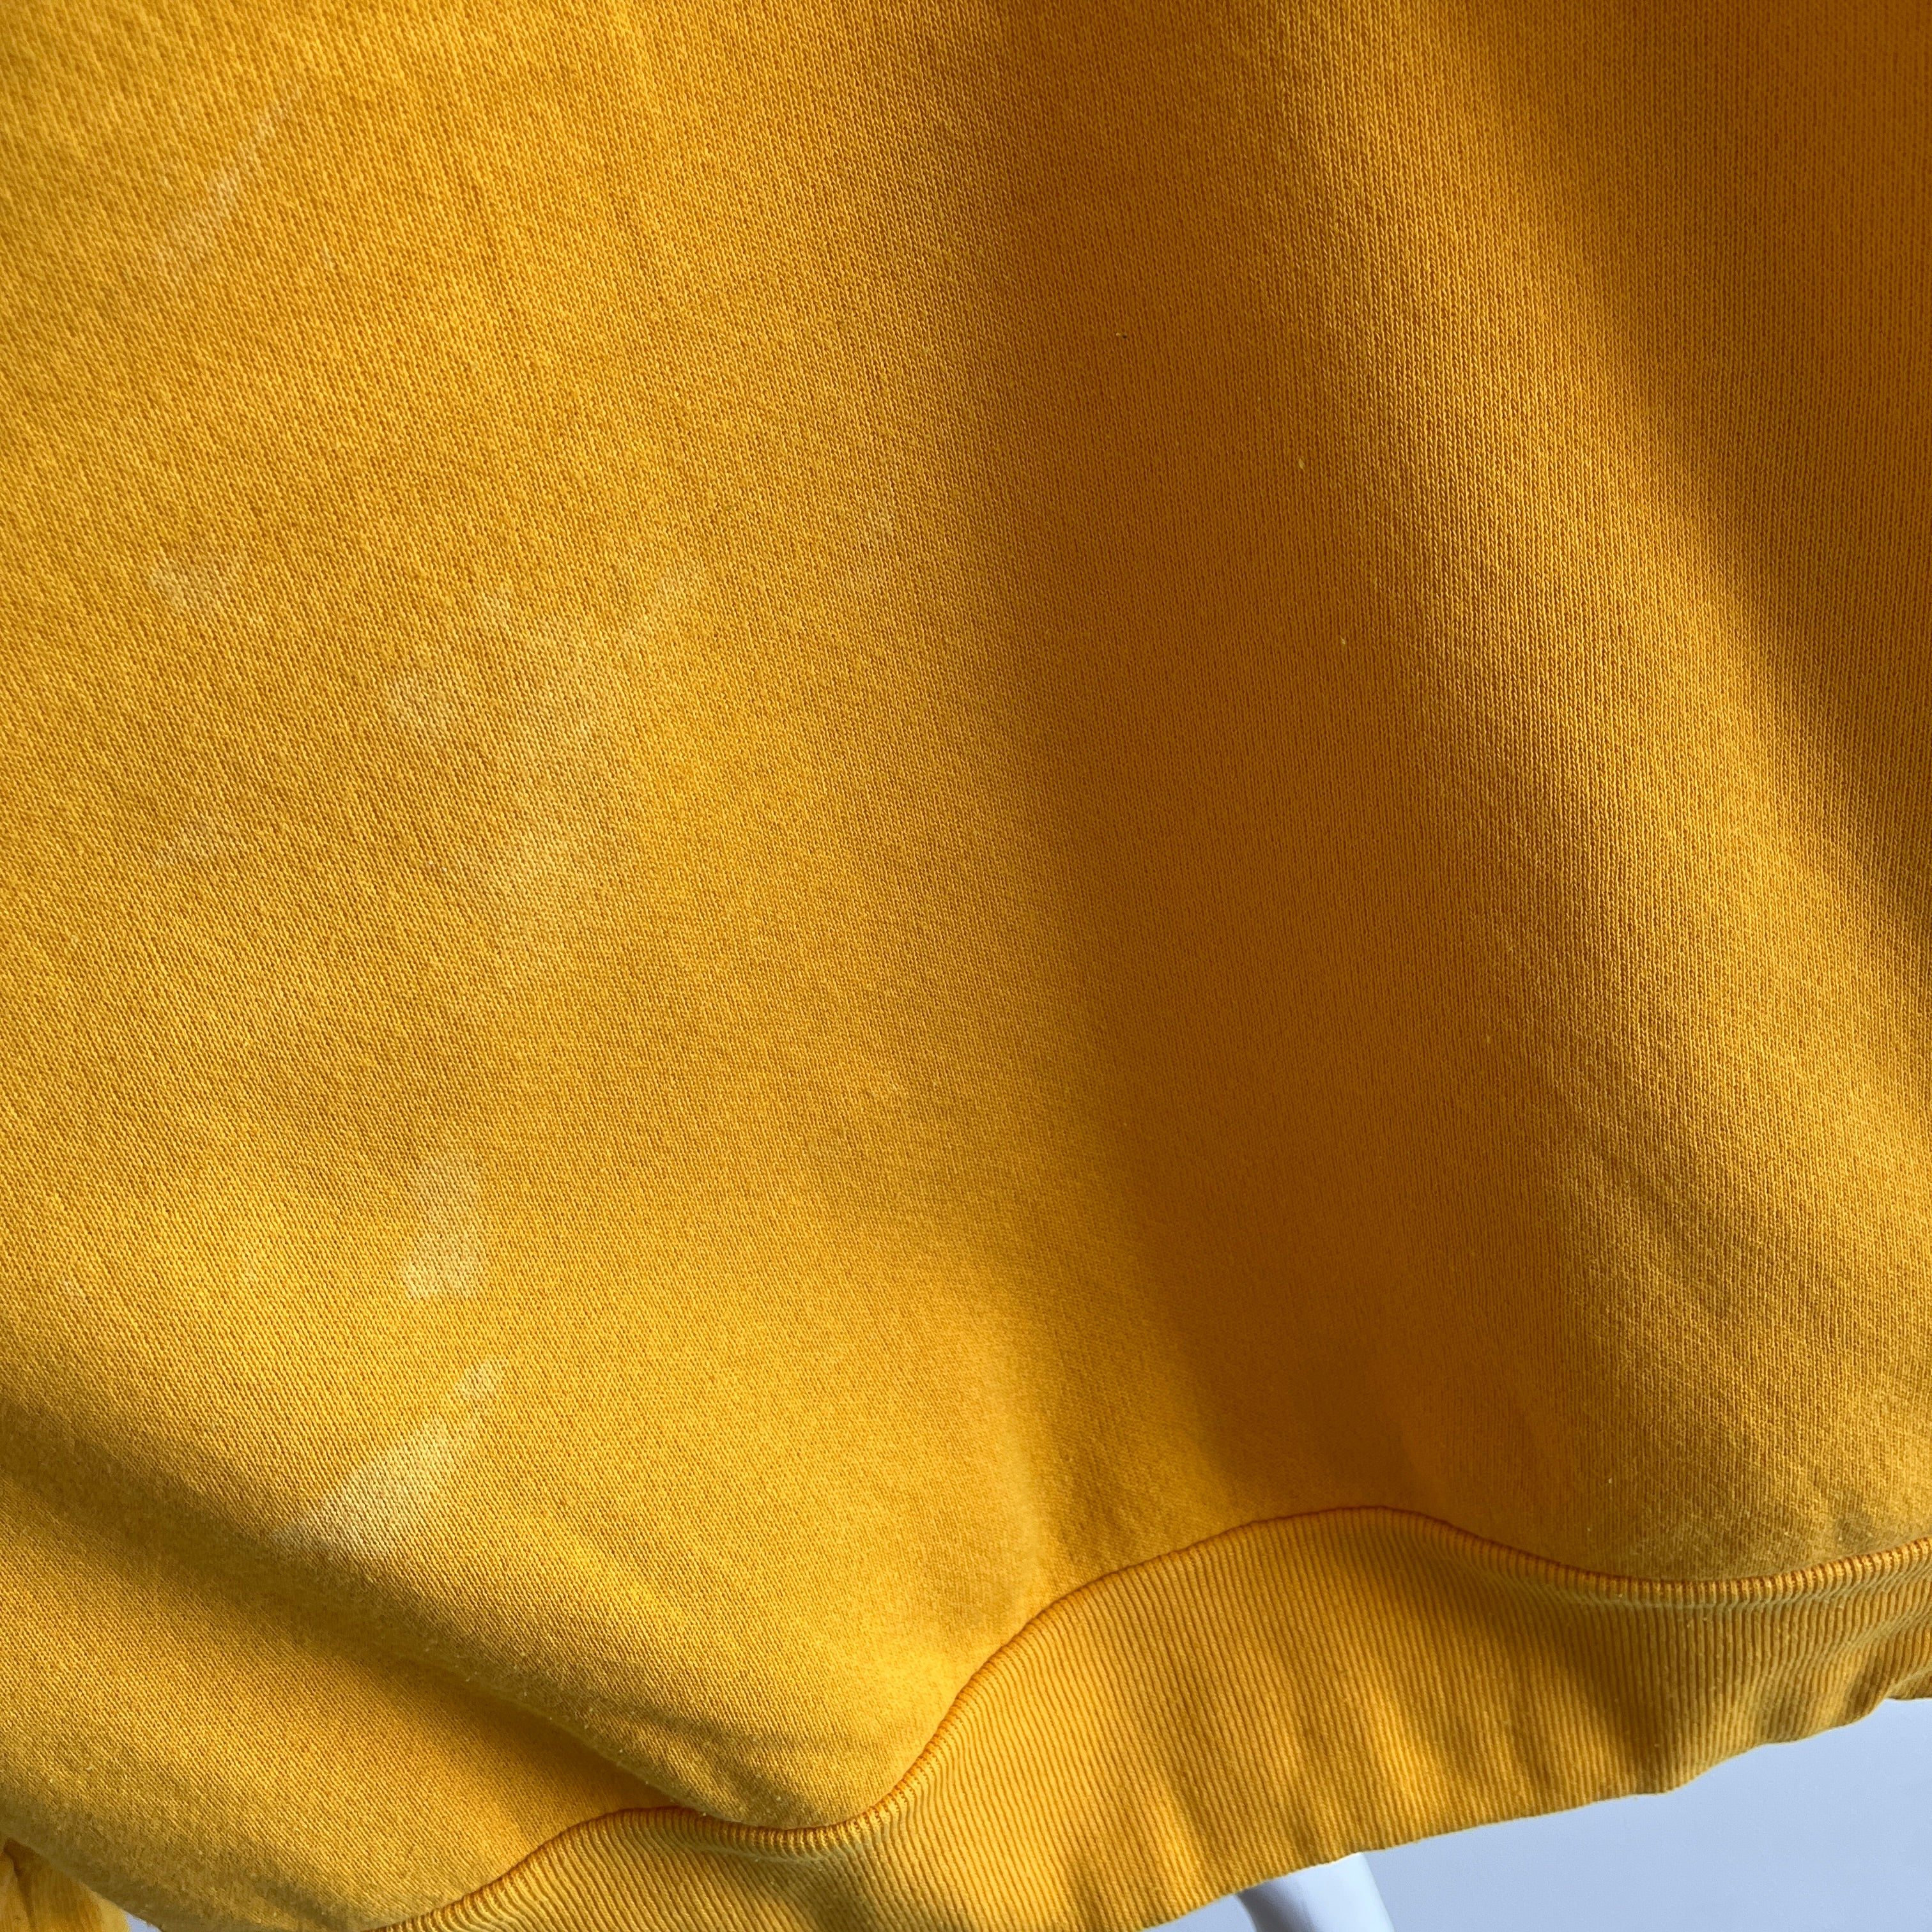 1980s Super Stained Blank Marigold Yellow Raglan Sweatshirt